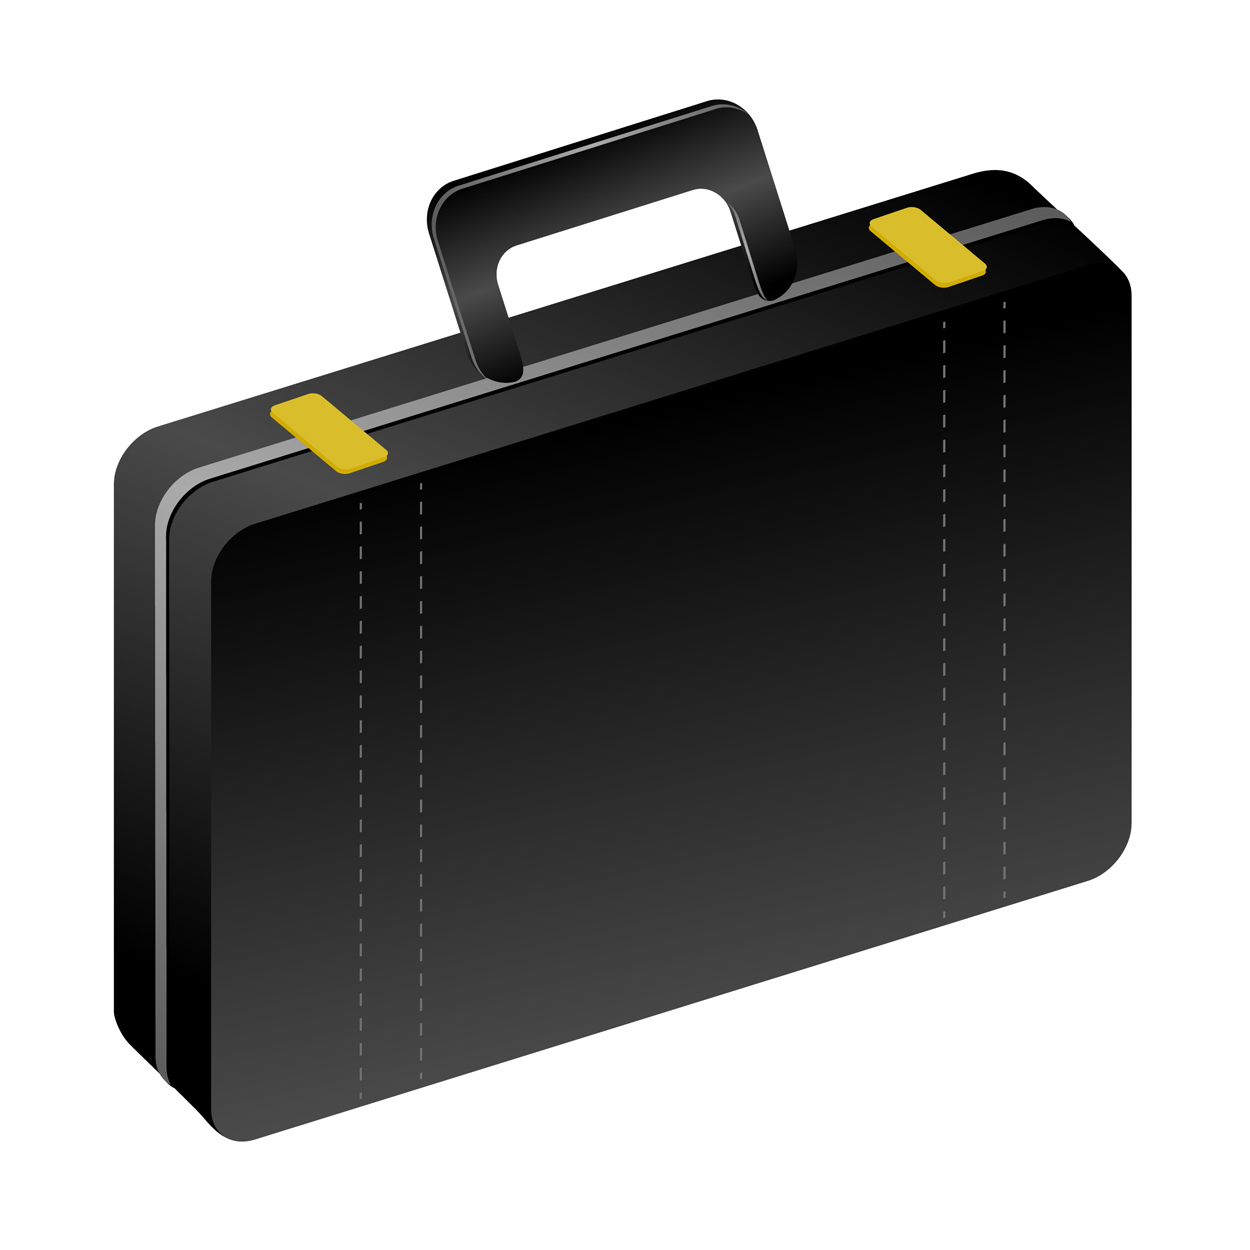 briefcase clipart - Briefcase Clip Art